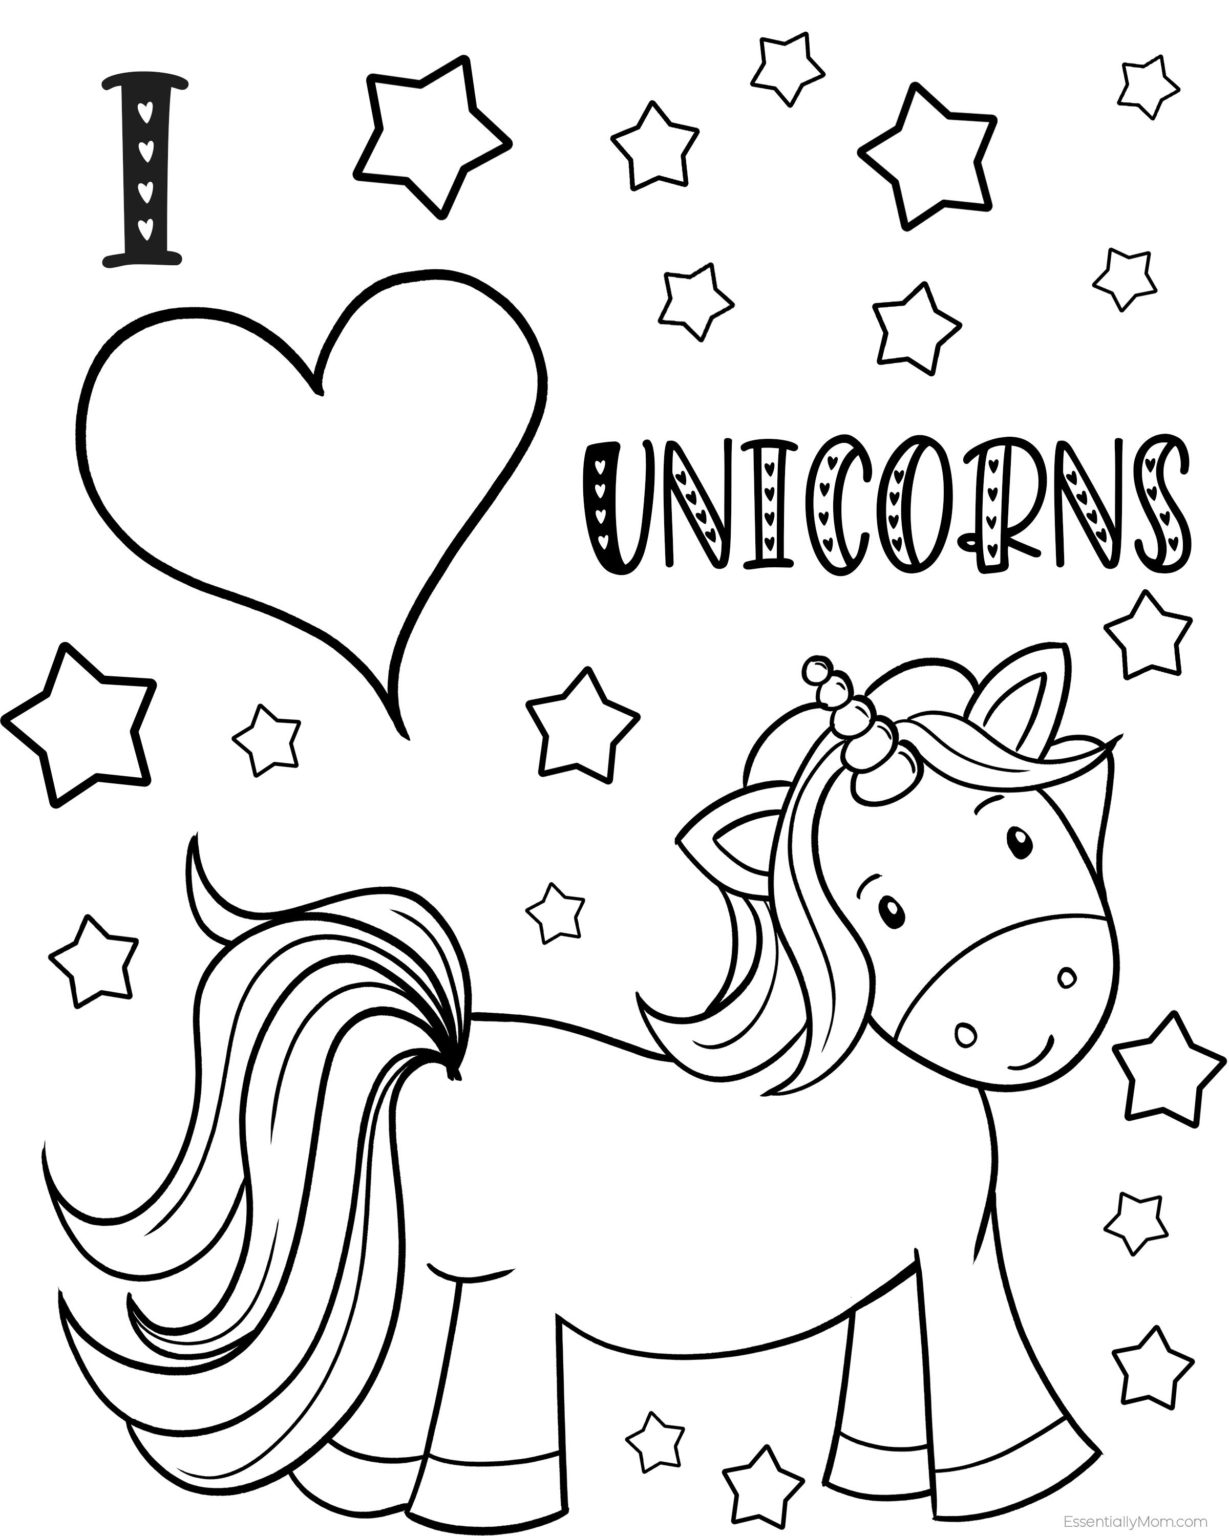 unicorn-coloring-page-printable-free